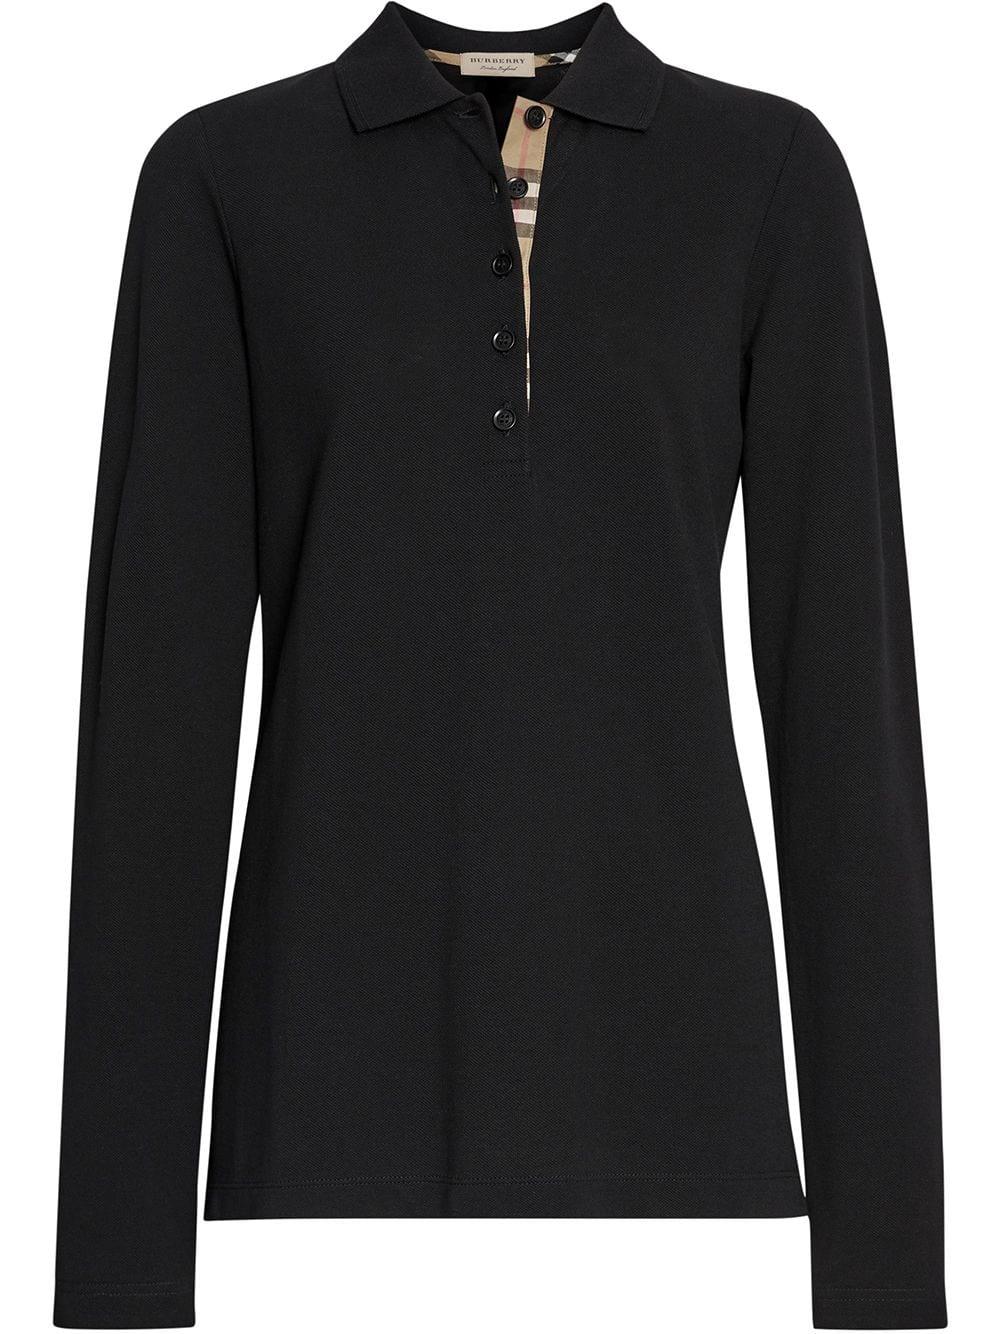 Burberry Long-sleeve Check Placket Cotton Piqué Polo Shirt in Black - Lyst